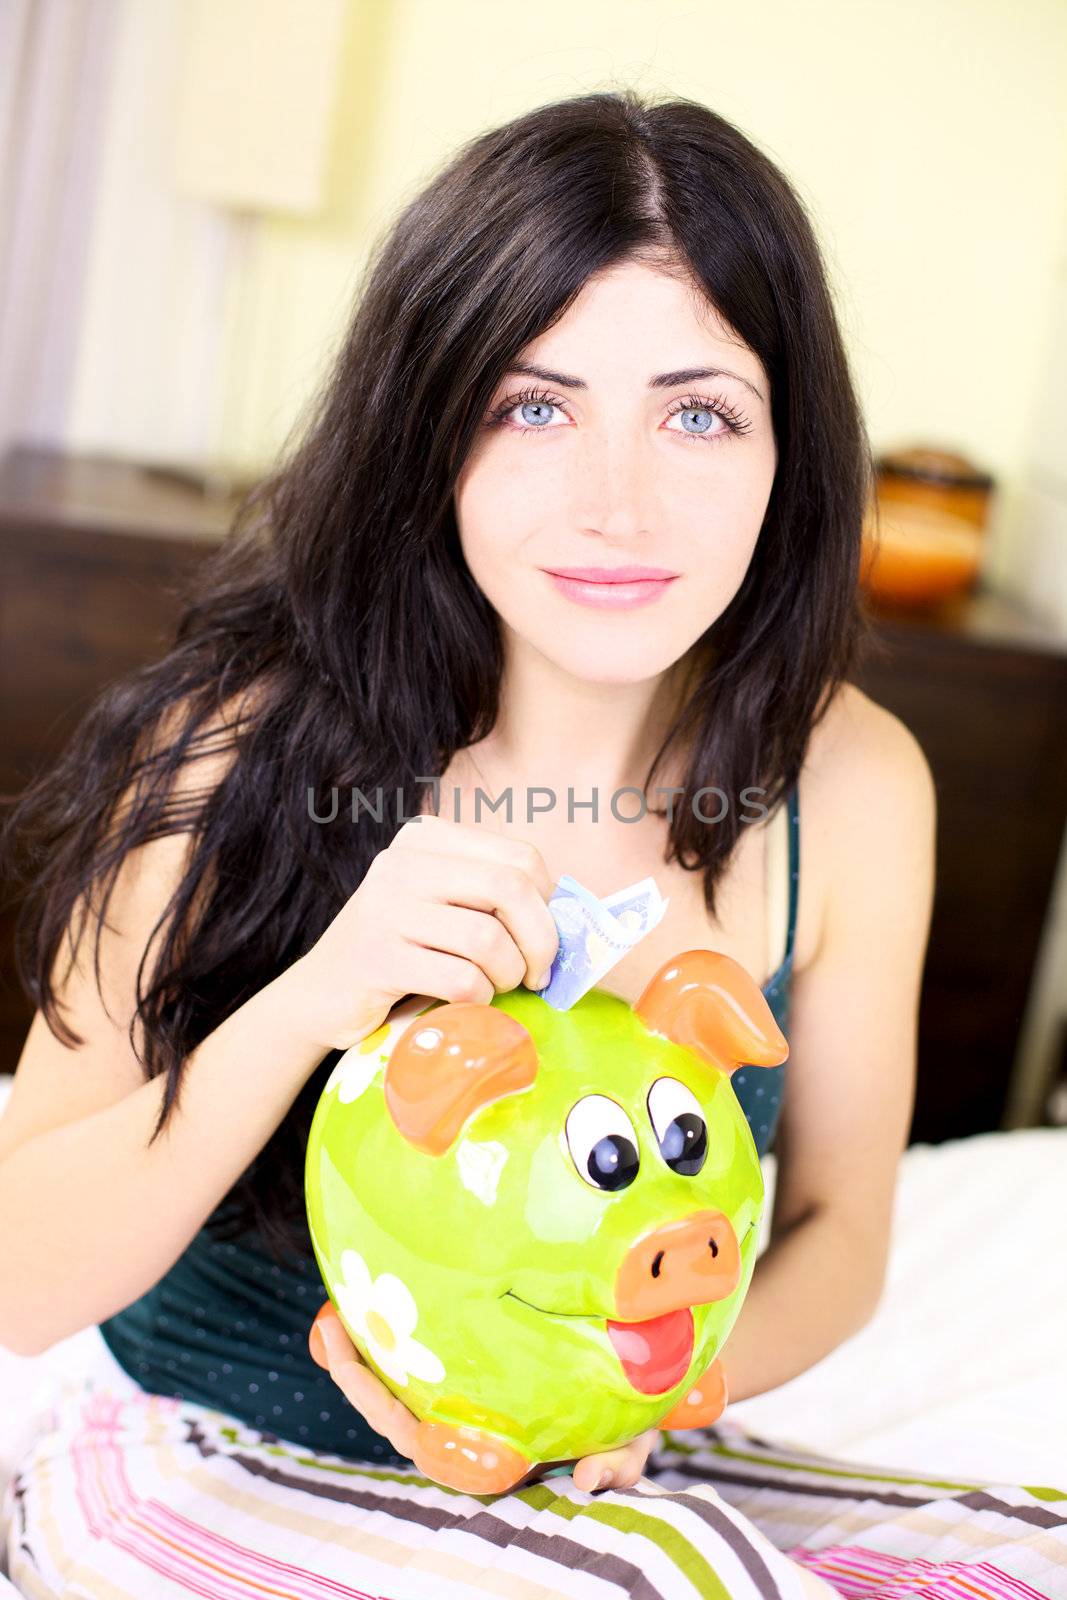 Happy woman putting money in piggy bank by fmarsicano